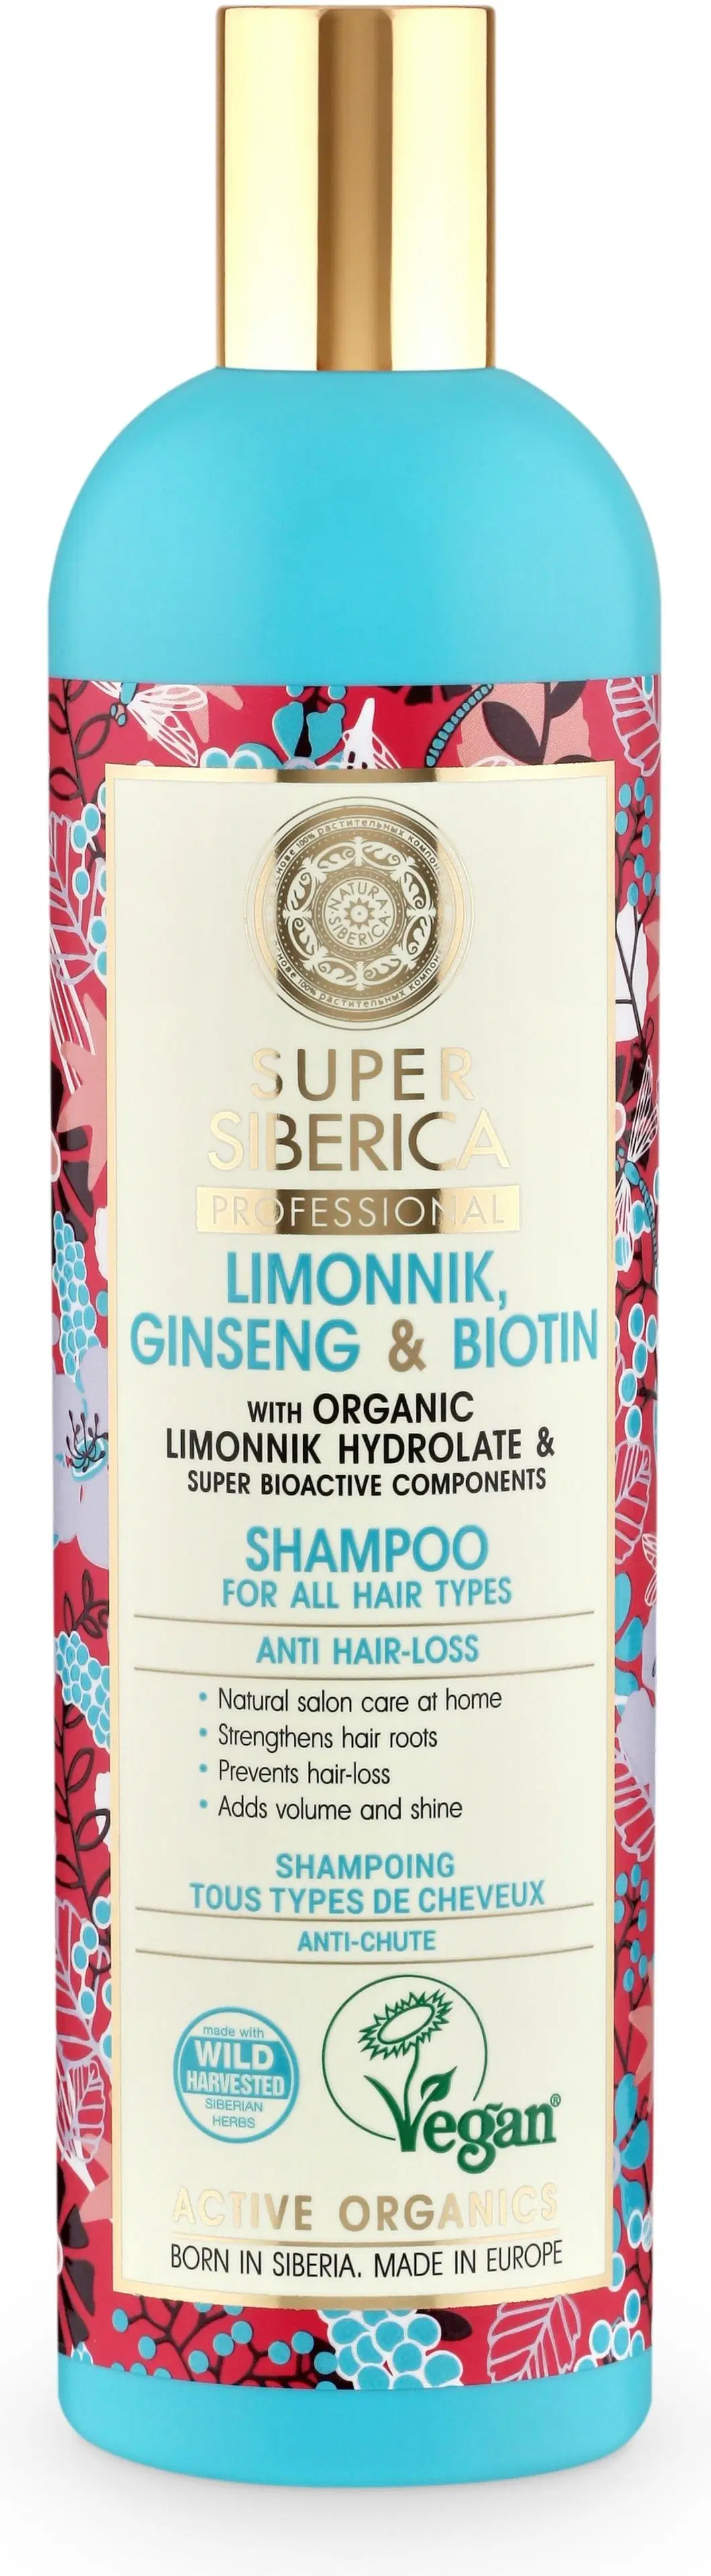 Natura Siberica Super Siberica Limonnik, ginseng & biotin - shampoo kaikille hiustyypeille, 400 ml